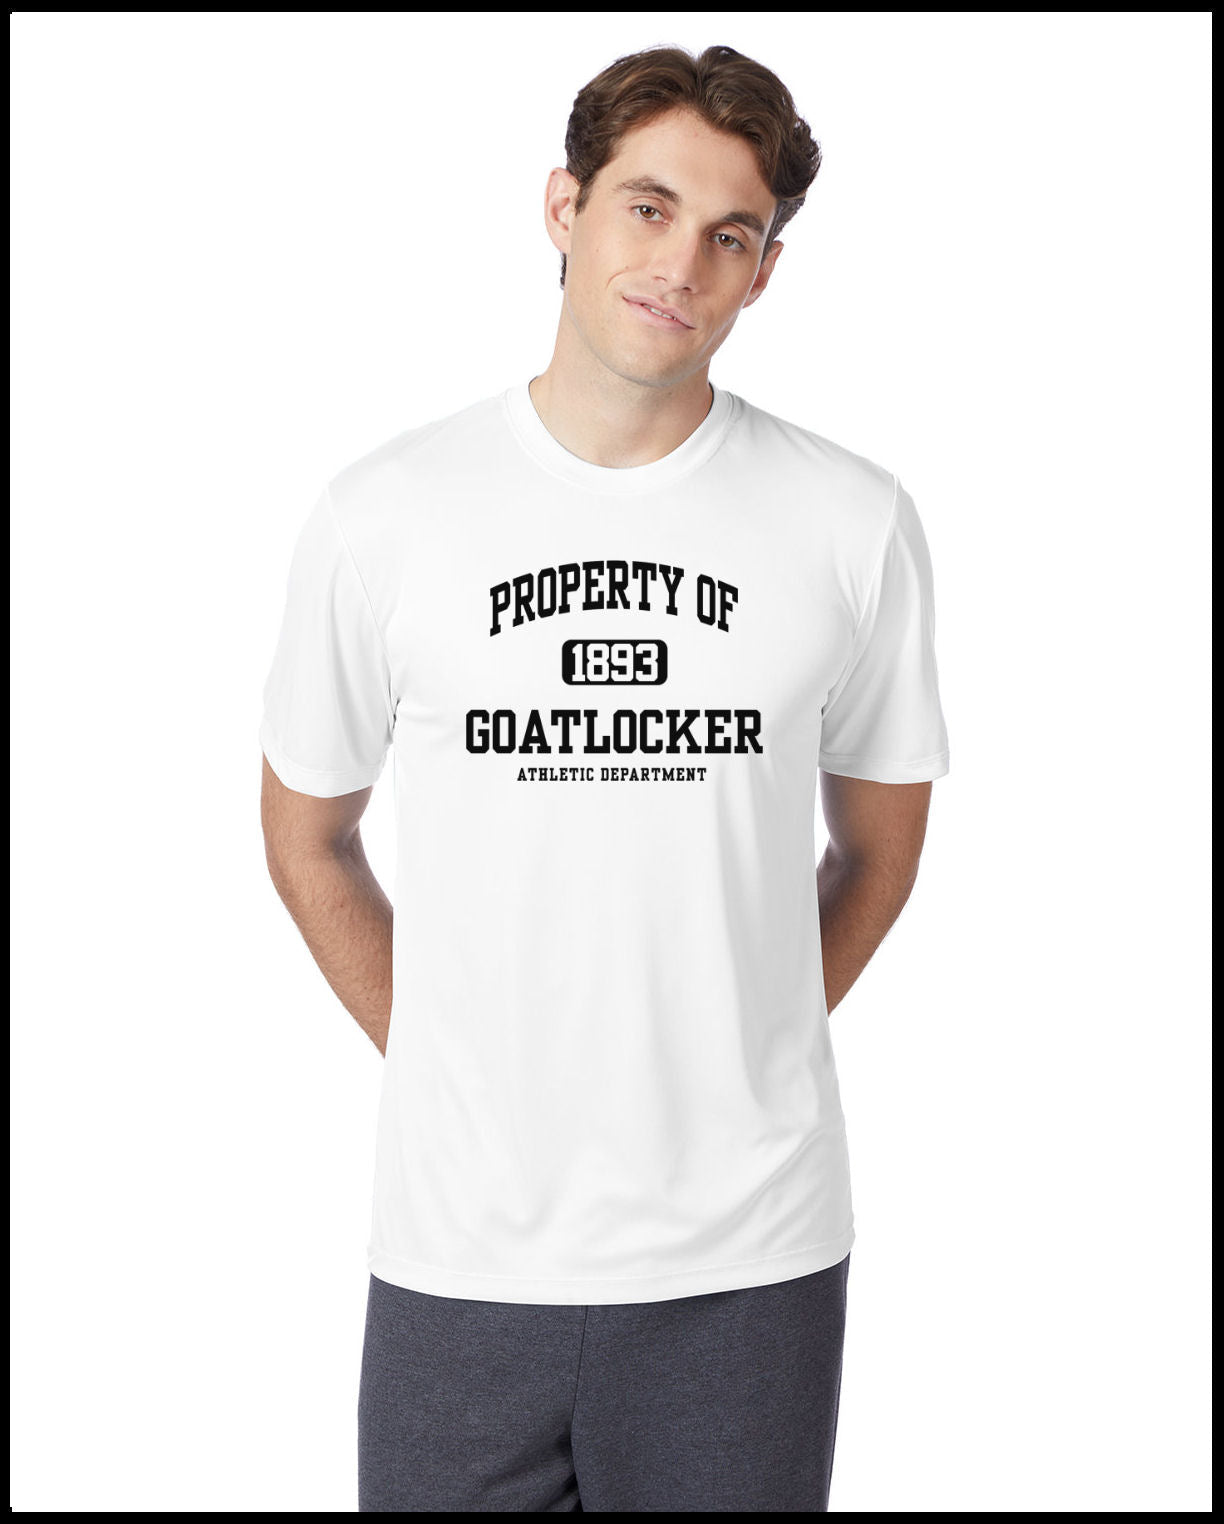 Property of Goat Locker 1893 White & Black T-Shirt Dry Fit Athletic